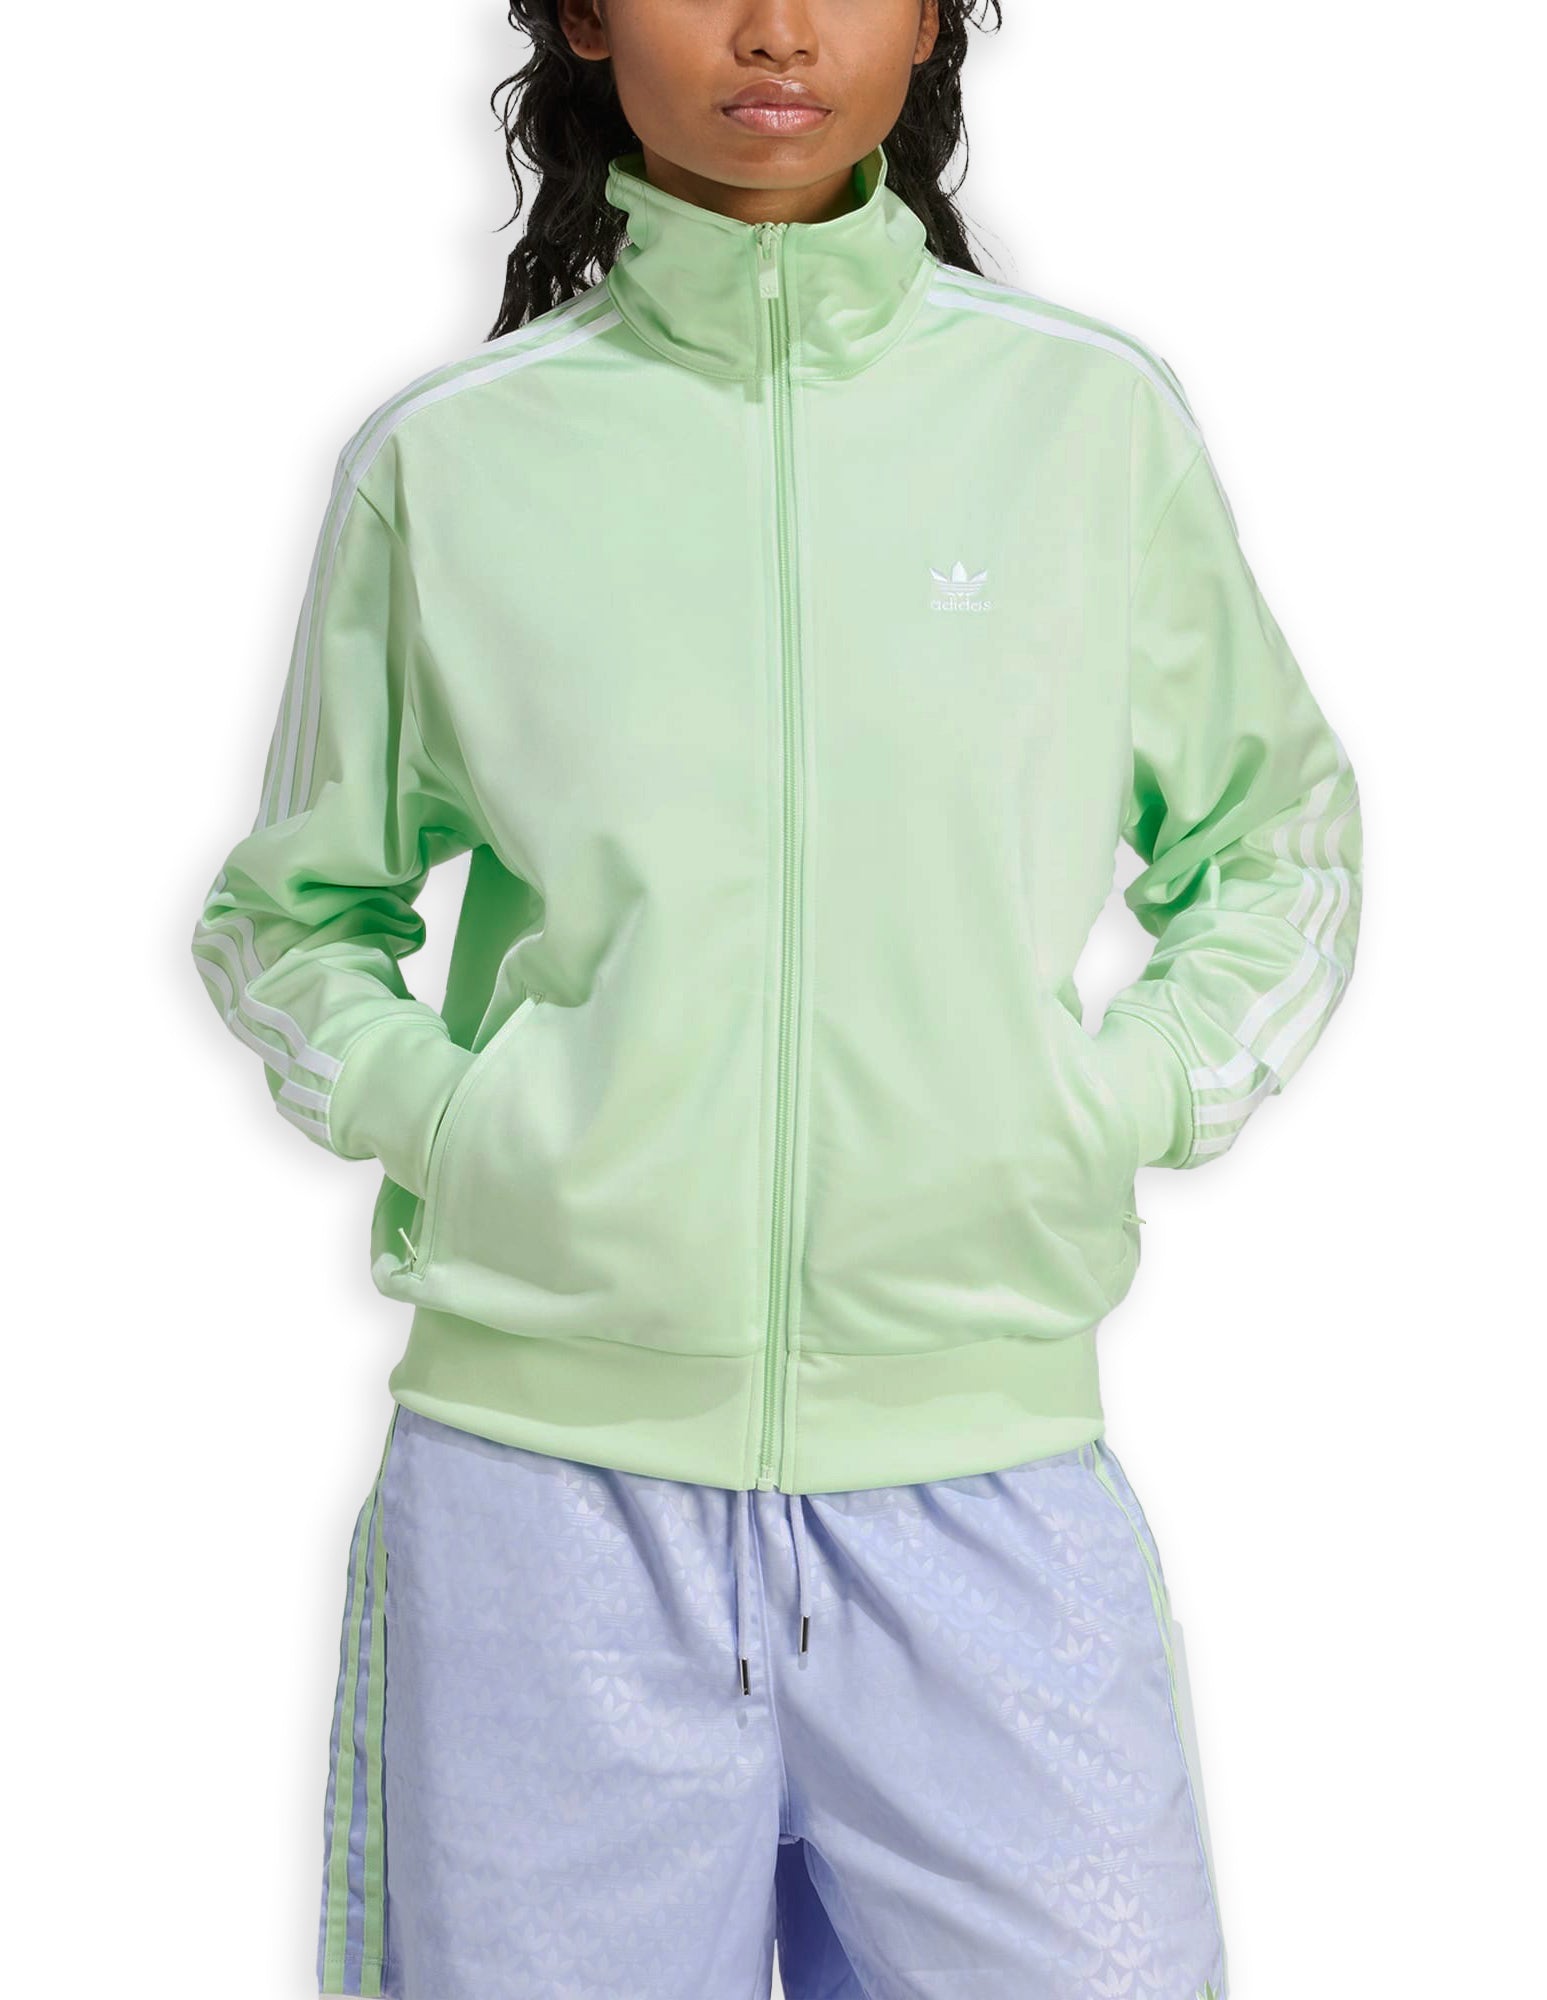 Adidas Firebird Tt Segrsp Aqua Green Women's Zip Sweatshirt